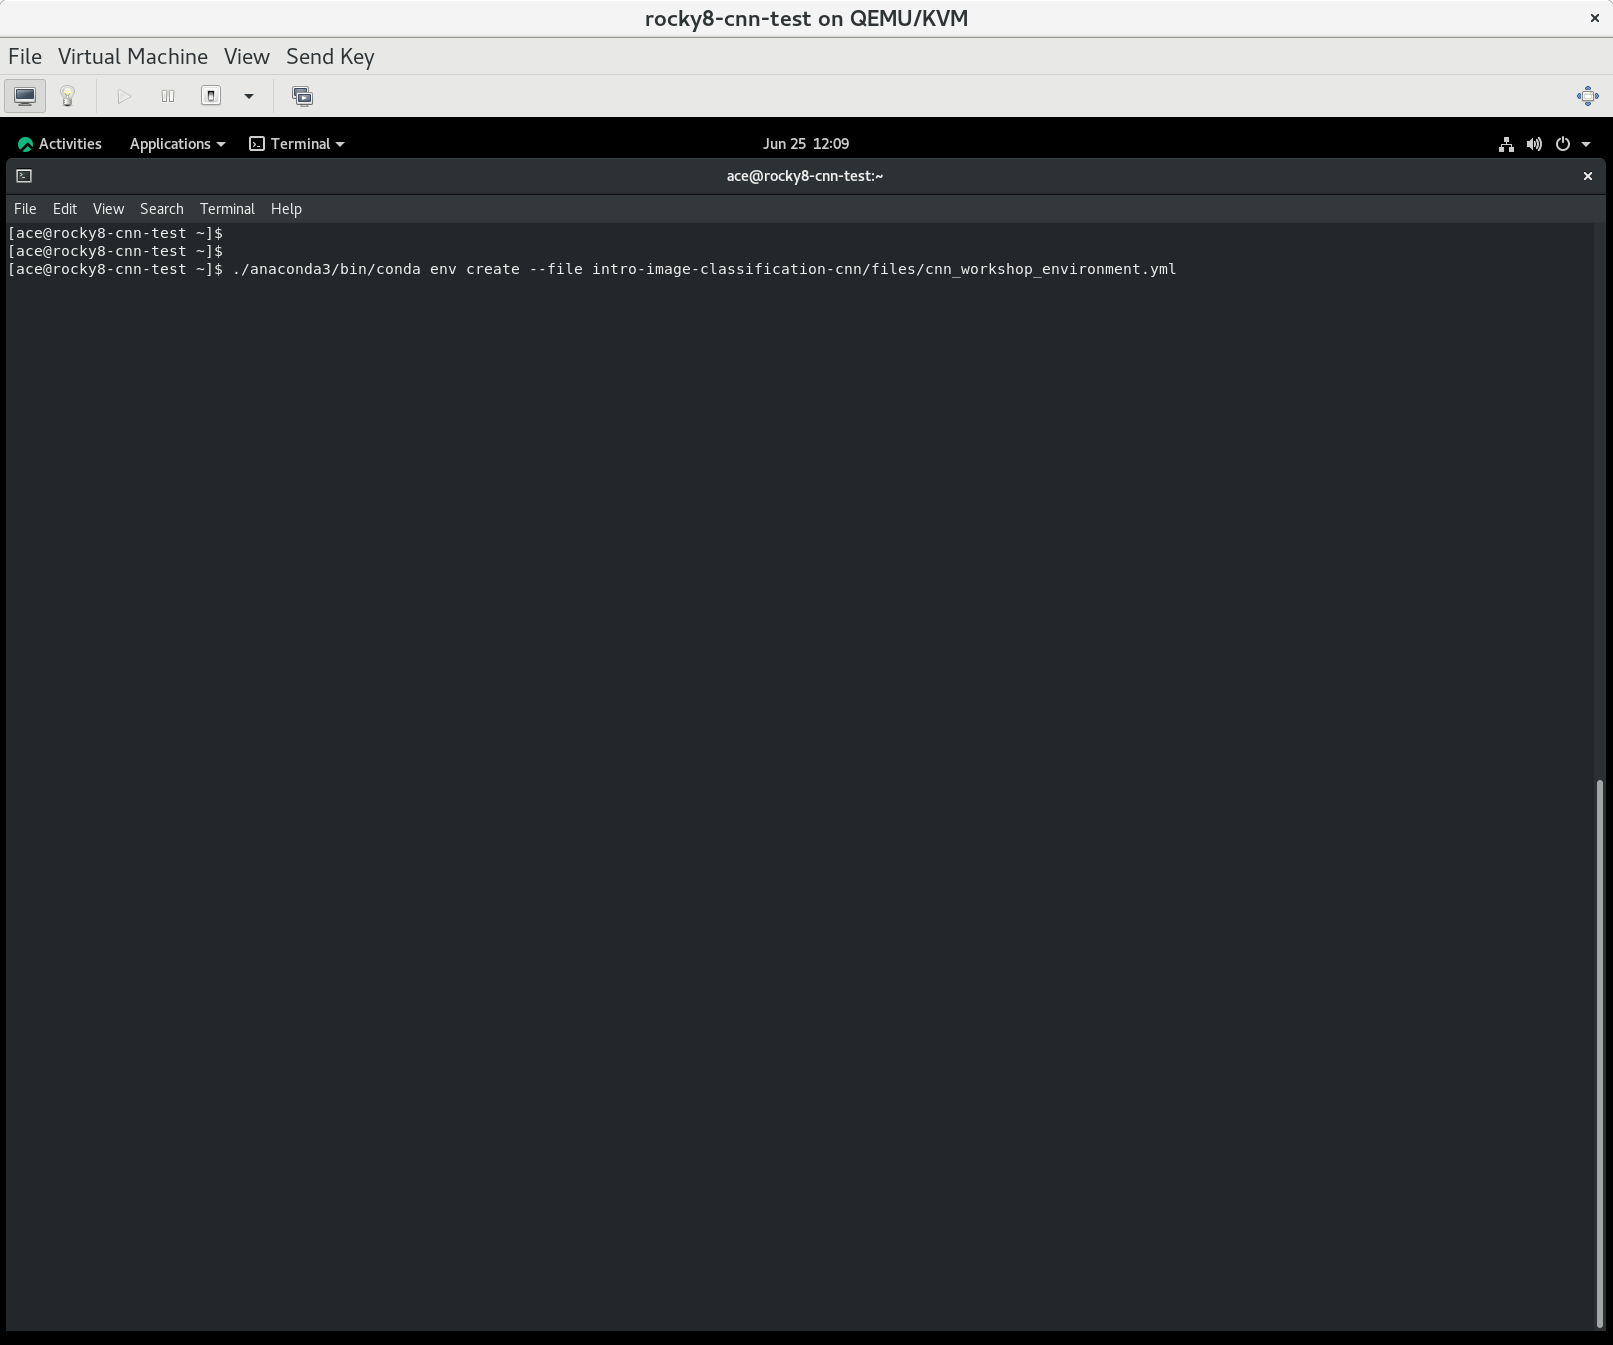 Screenshot of creating conda enviroment on a Linux.